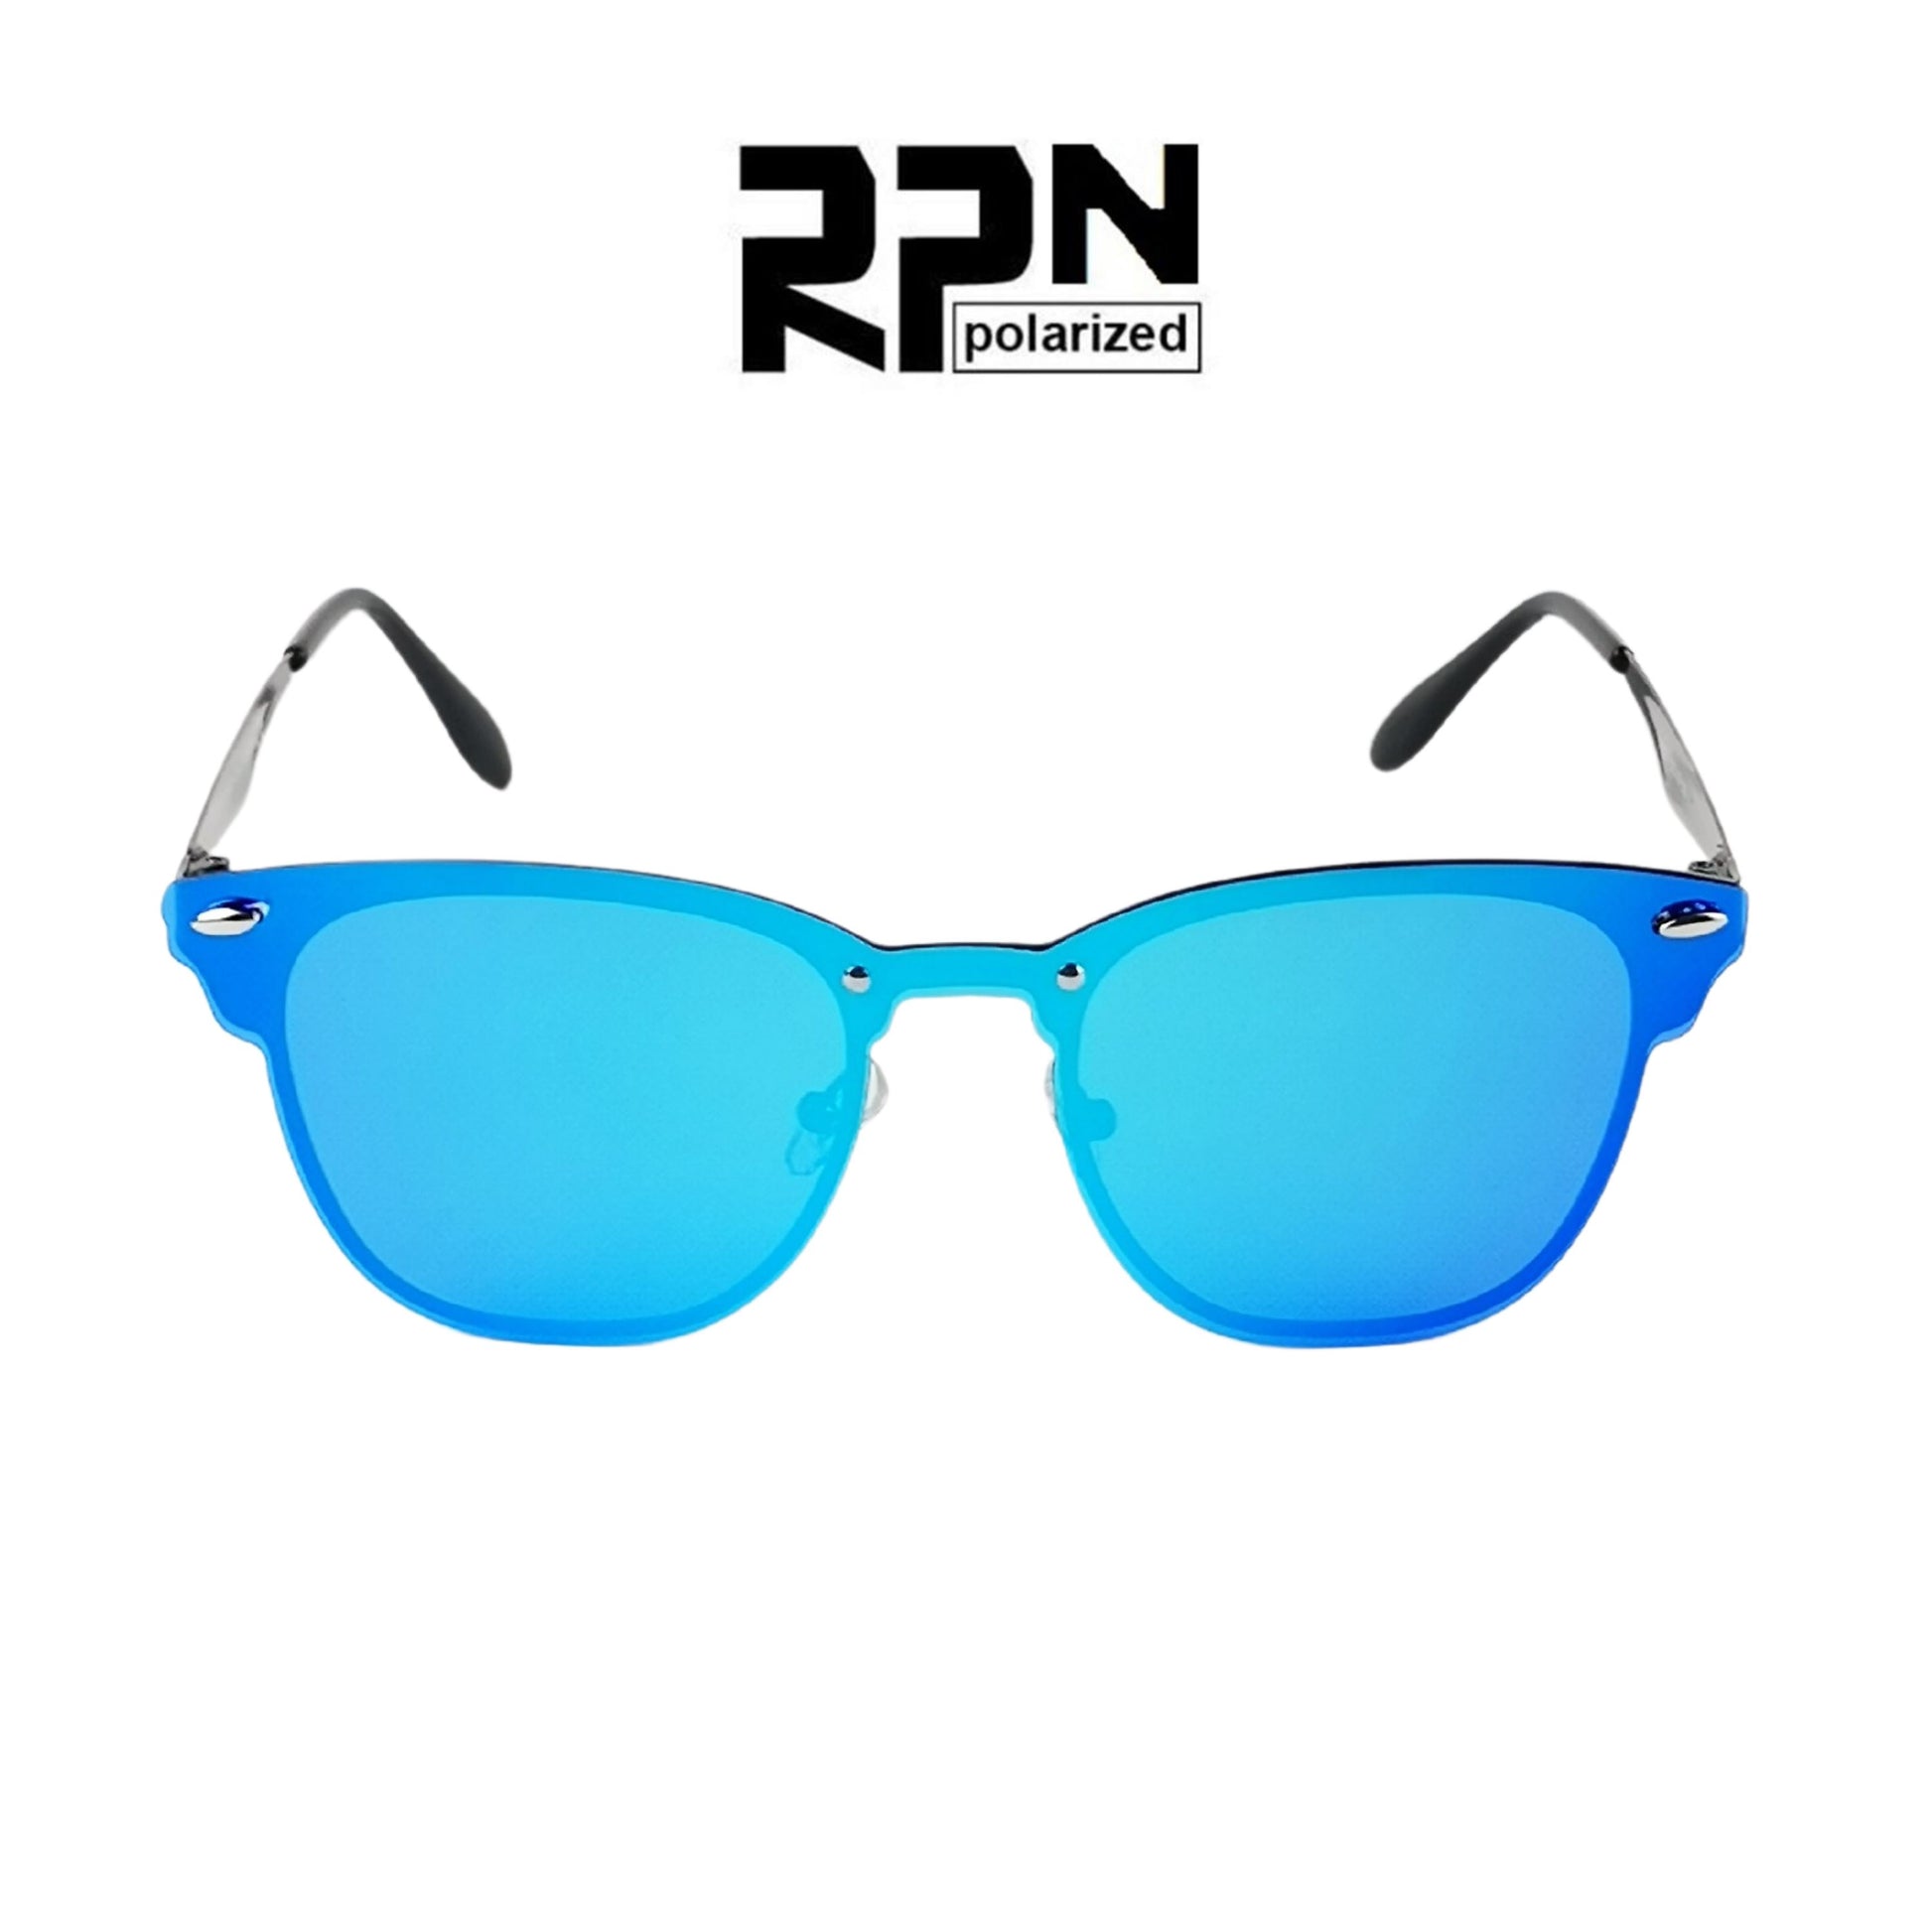 RPN sunčane naočale P9201 KIKY 